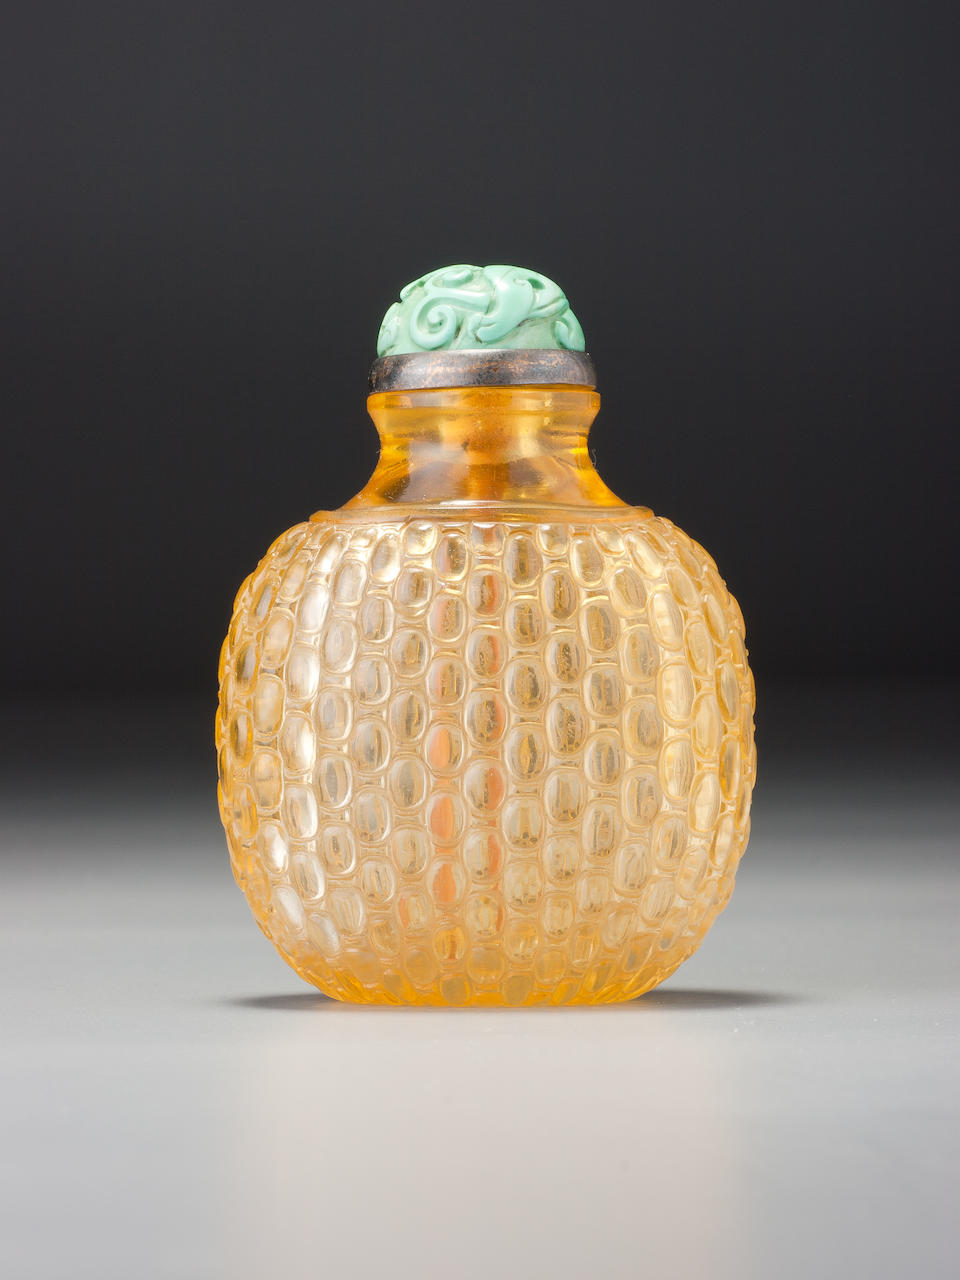 A golden-yellow glass 'basket-weave' snuff bottle 1750-1840.